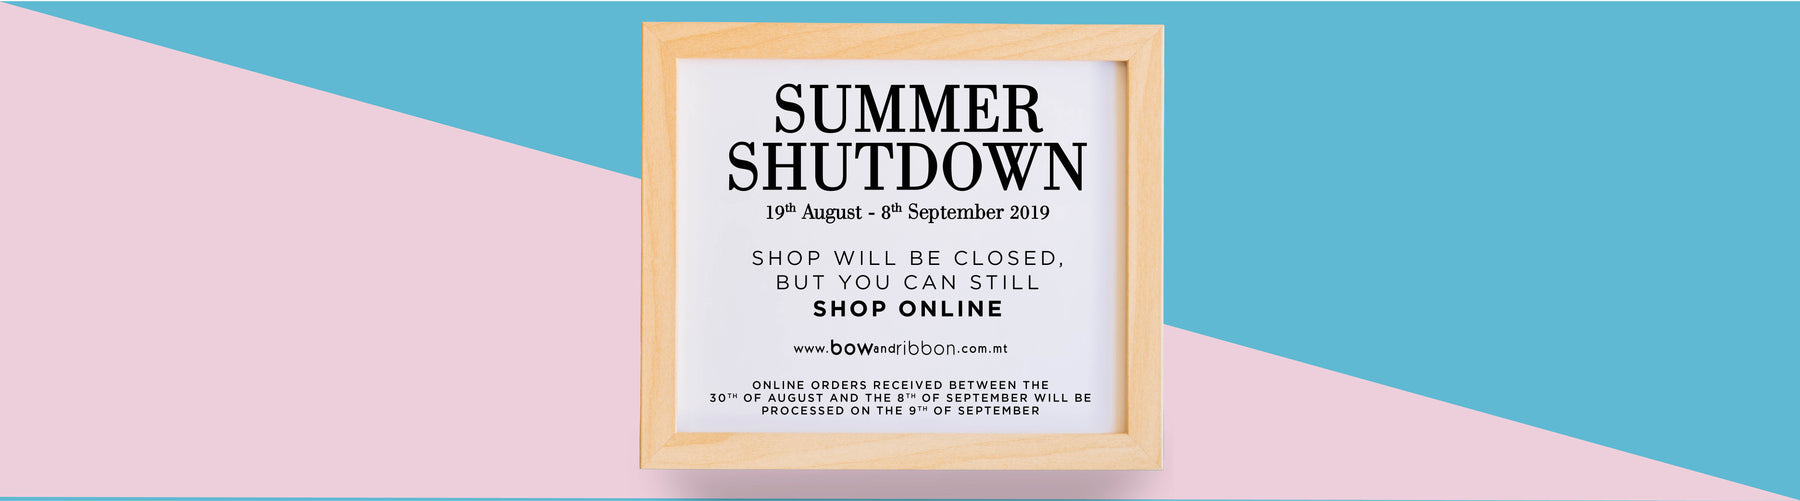 Summer Shutdown 2019